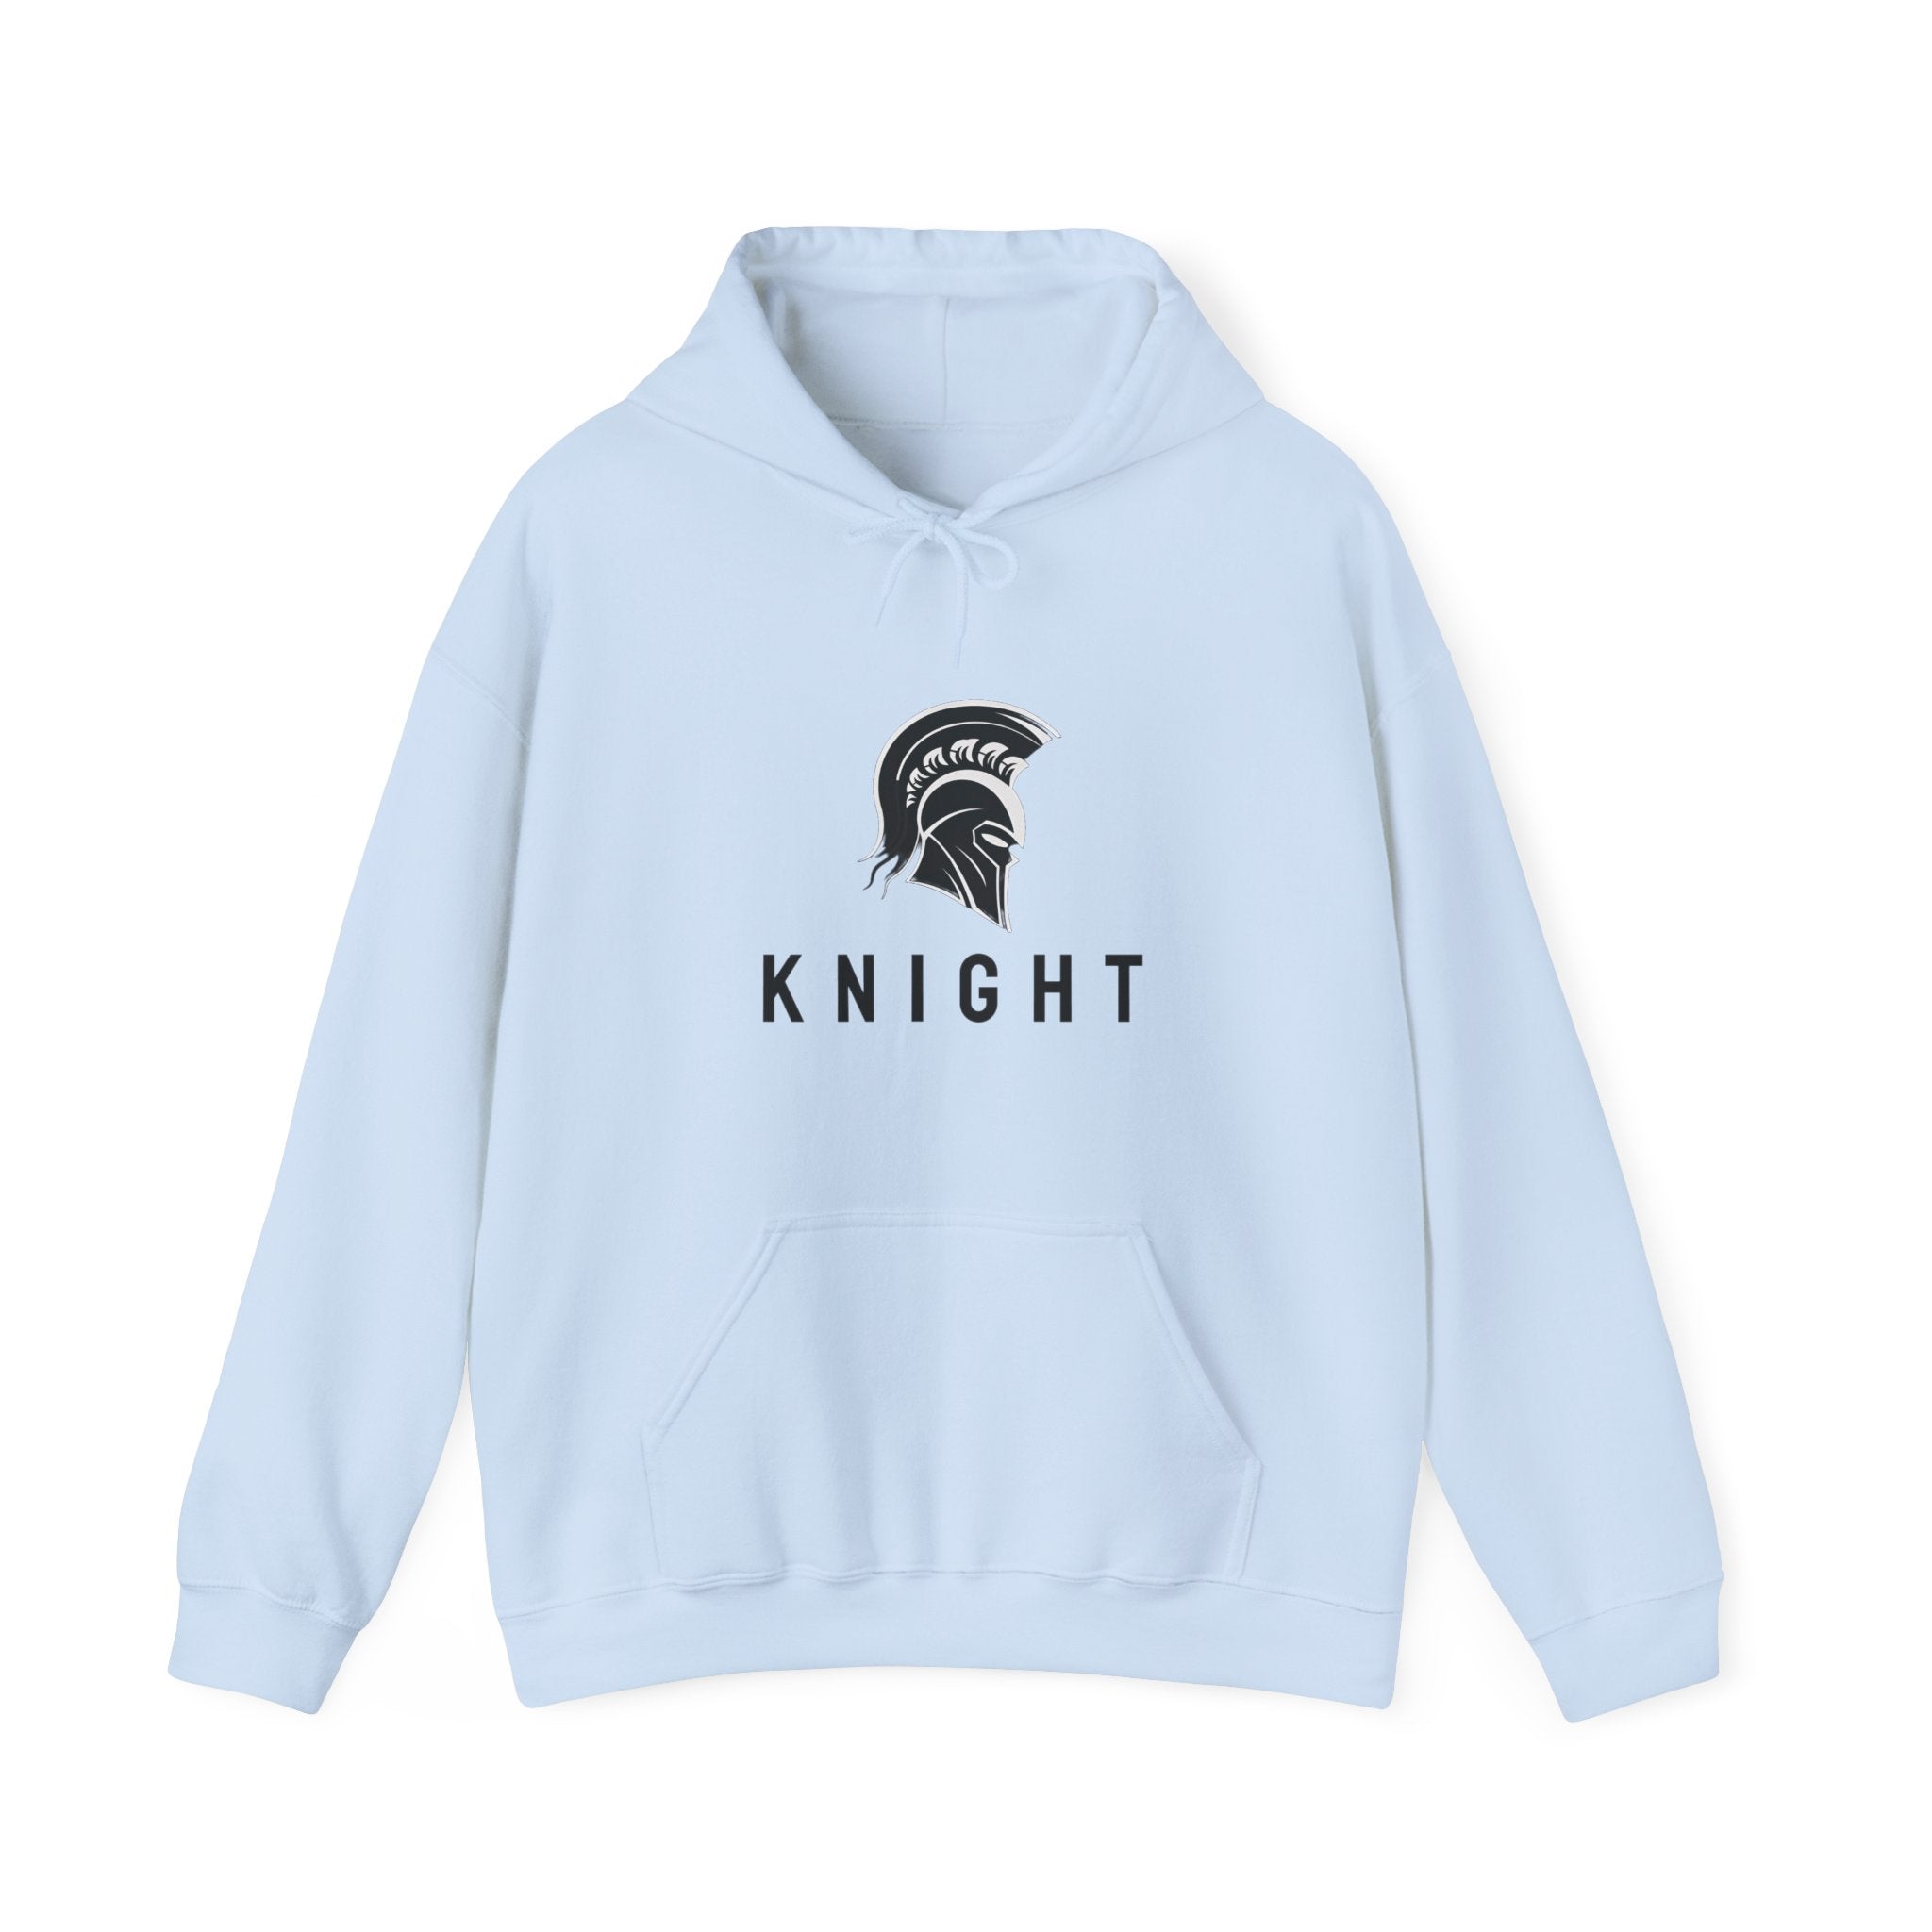 The Knight Hooded Sweatshirt